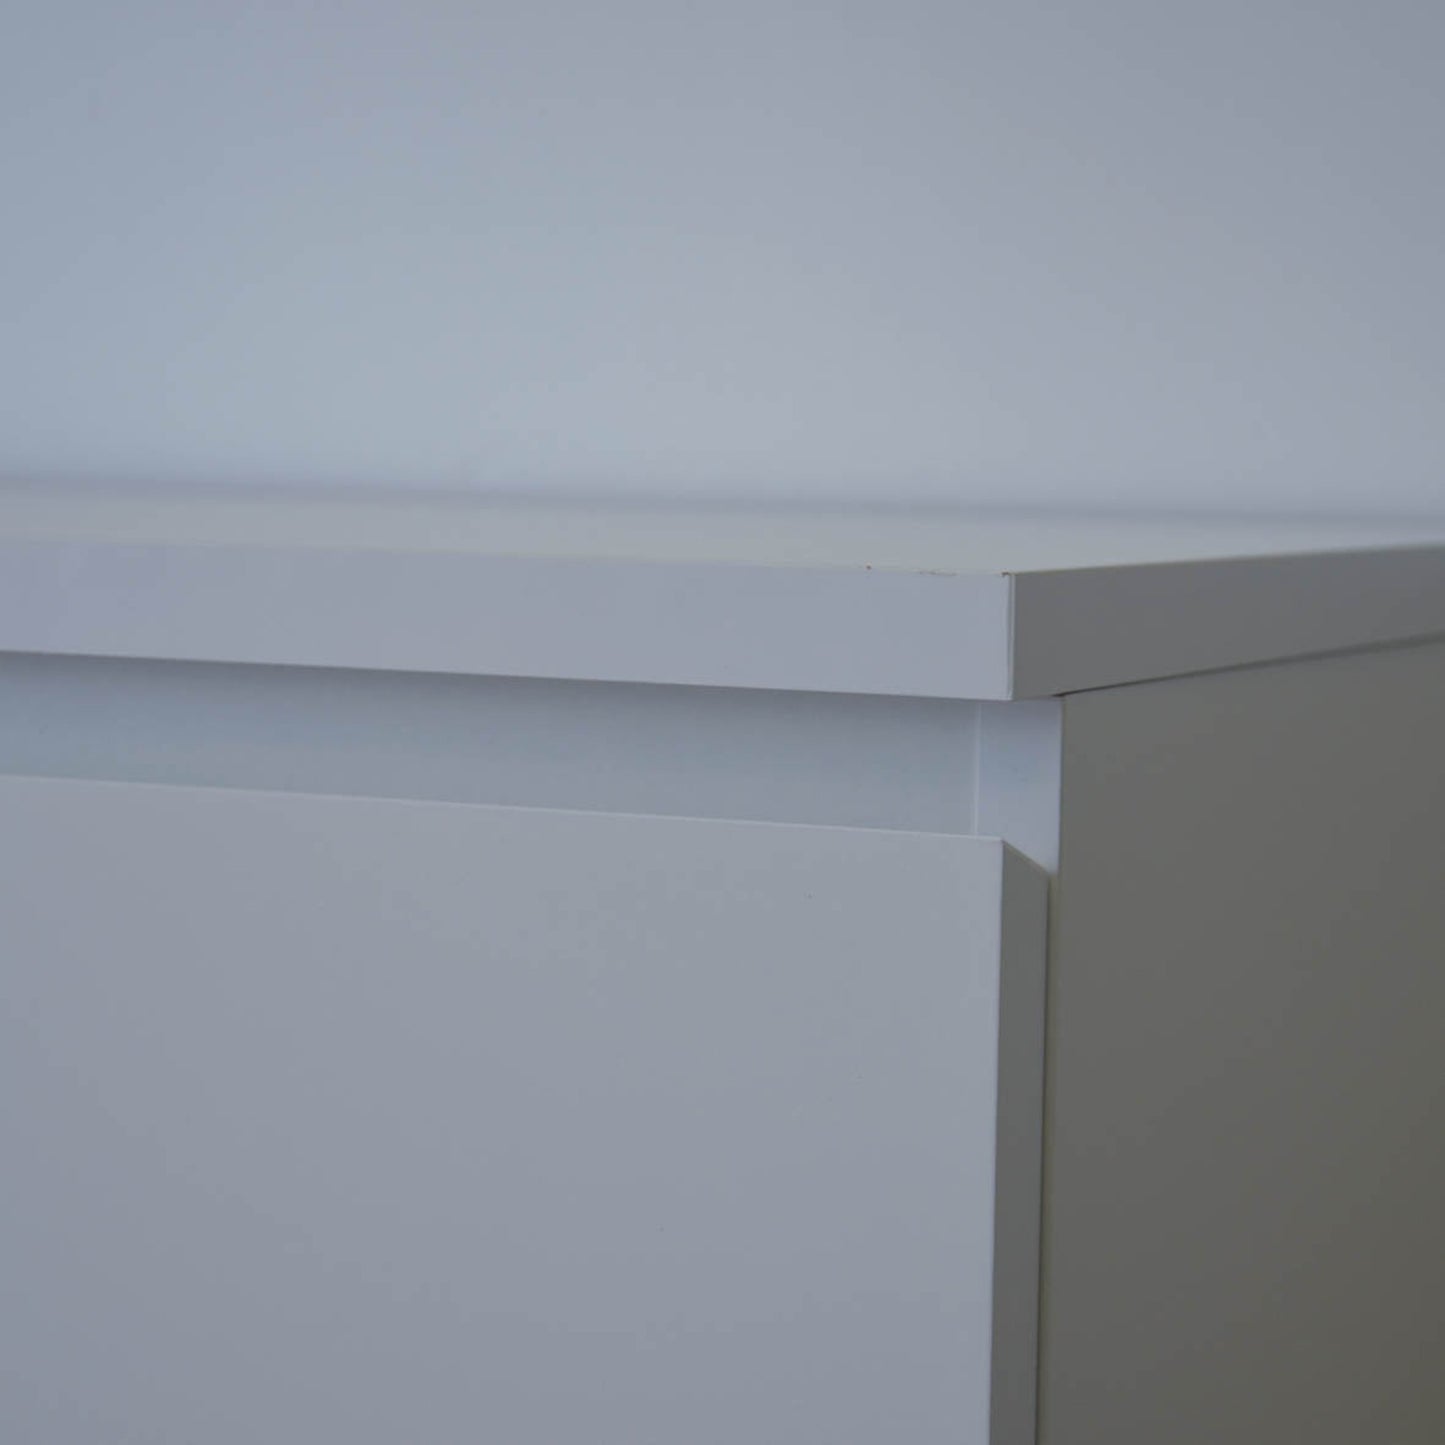 IKEA Malm 6-Drawer Lowboy Chest, 160x48x78cm, White (4369698914369)